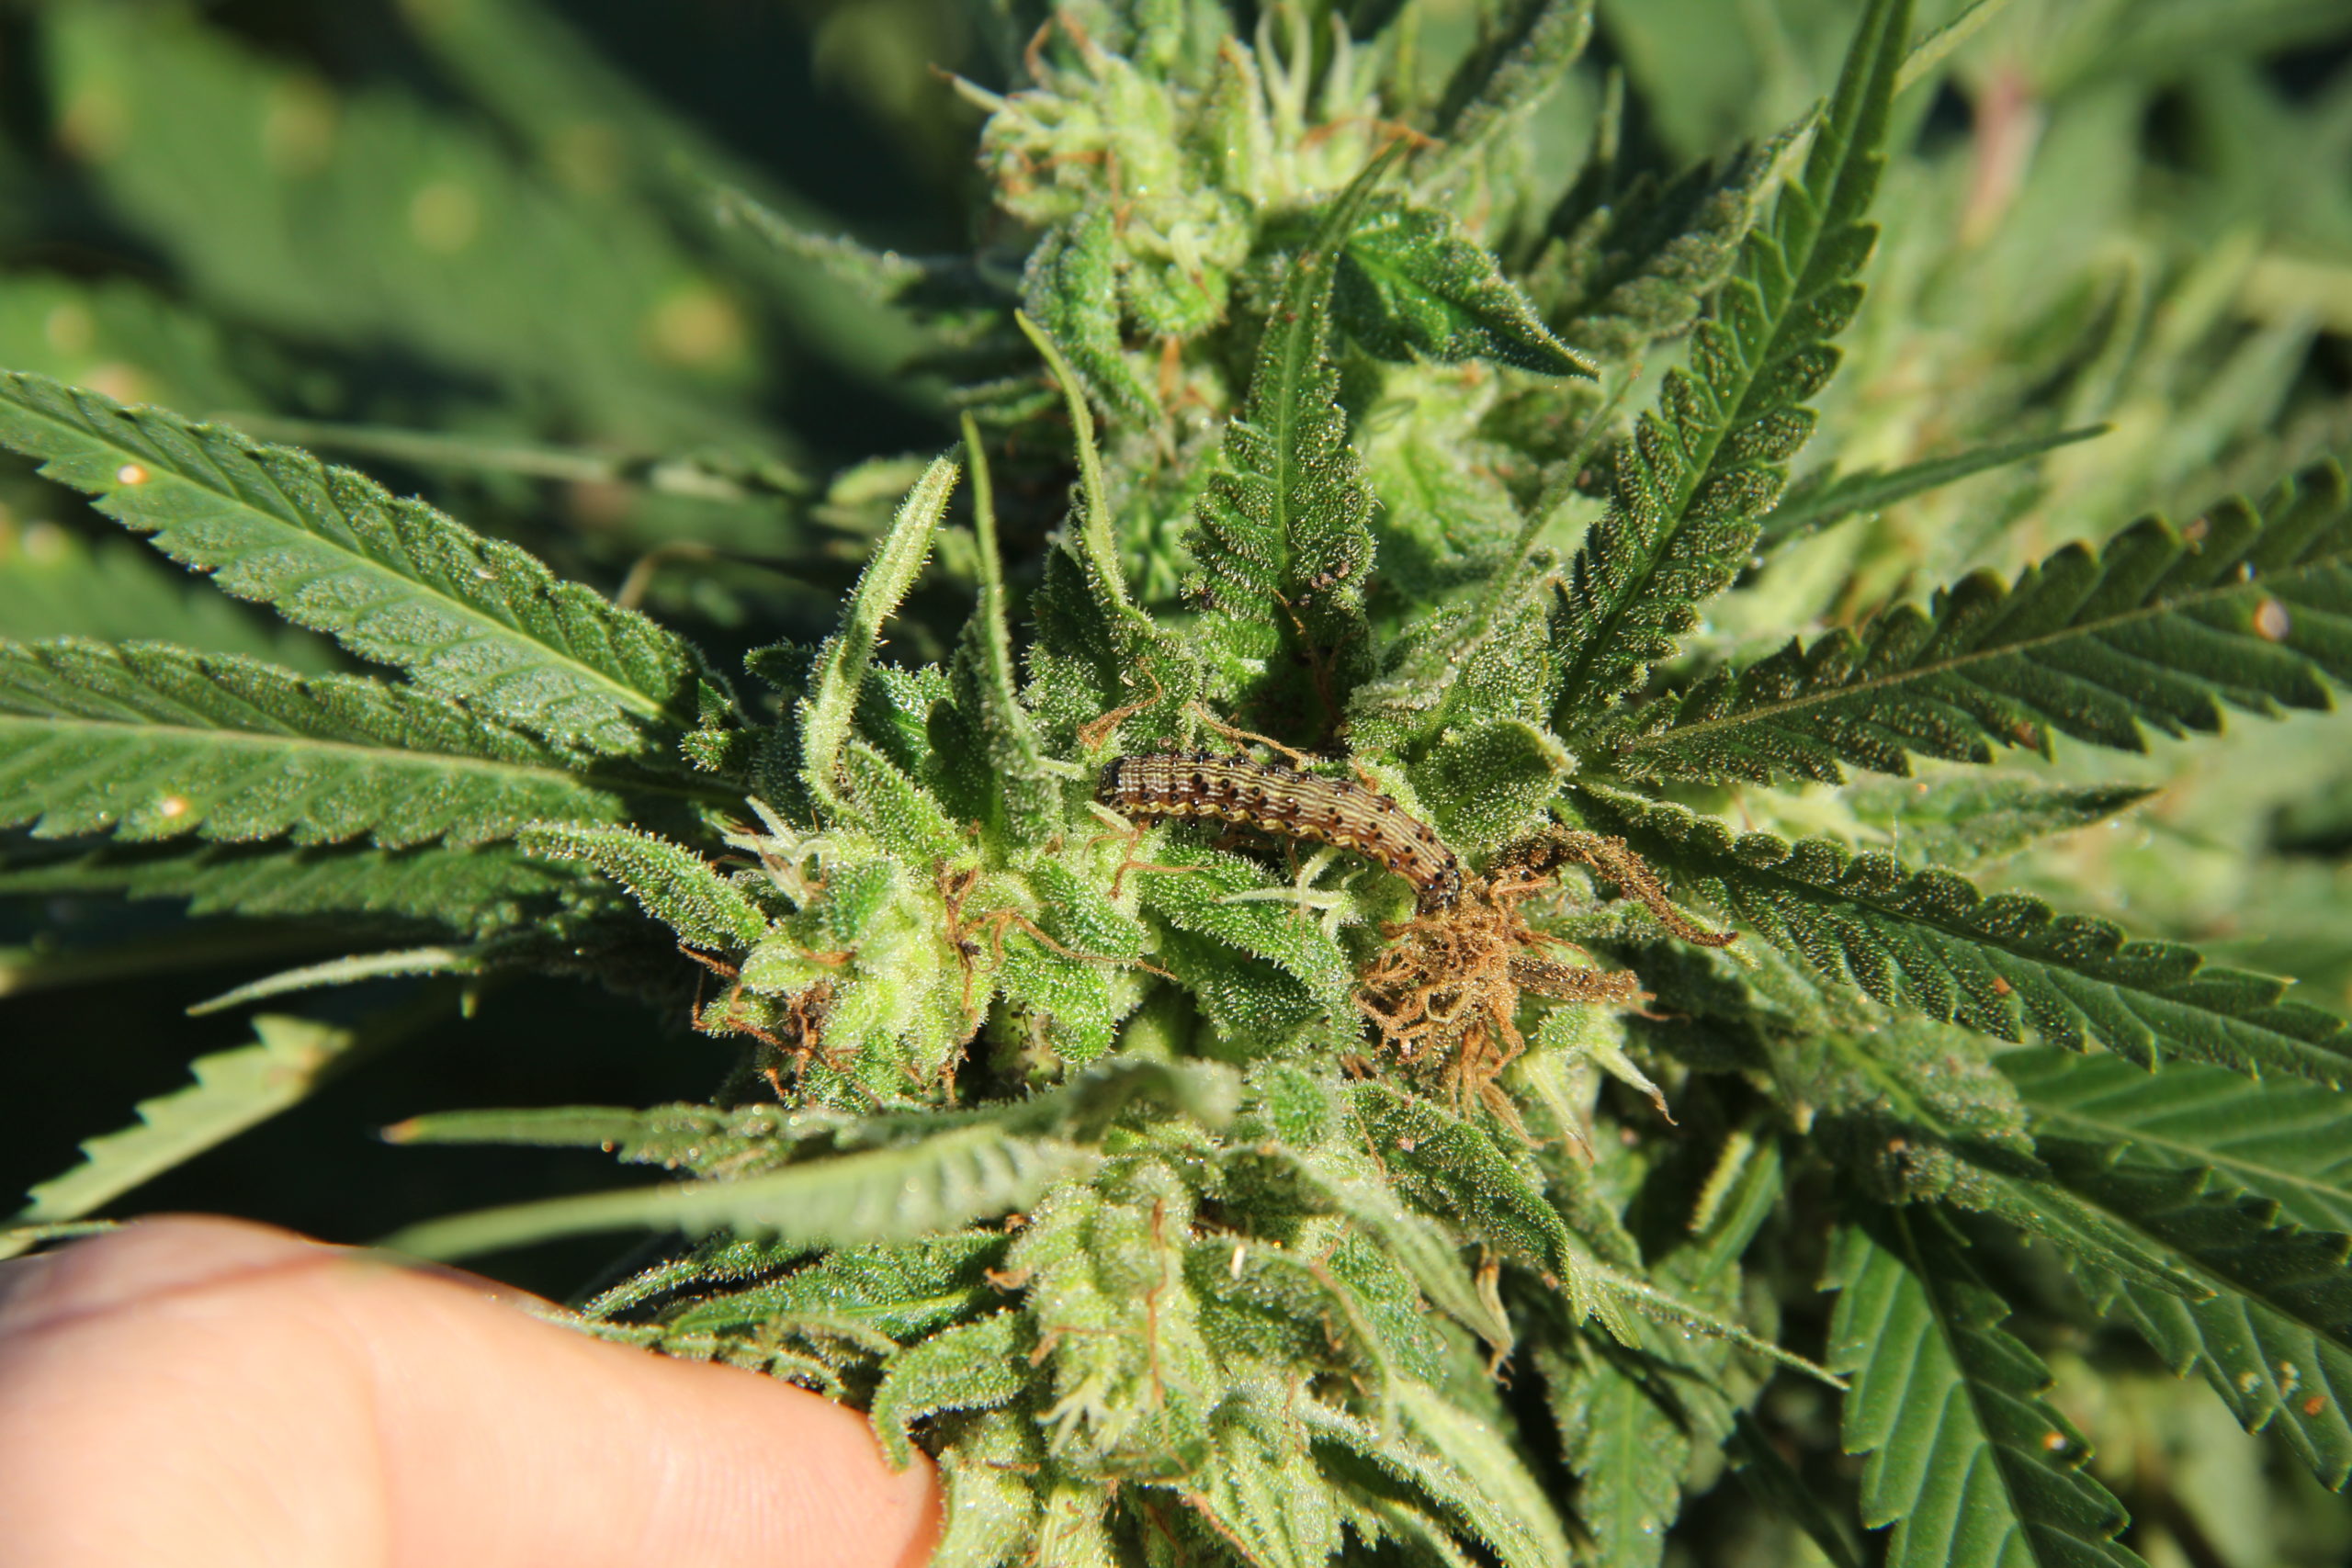 Image of a small corn earworm on a cannabinoid hemp plant.